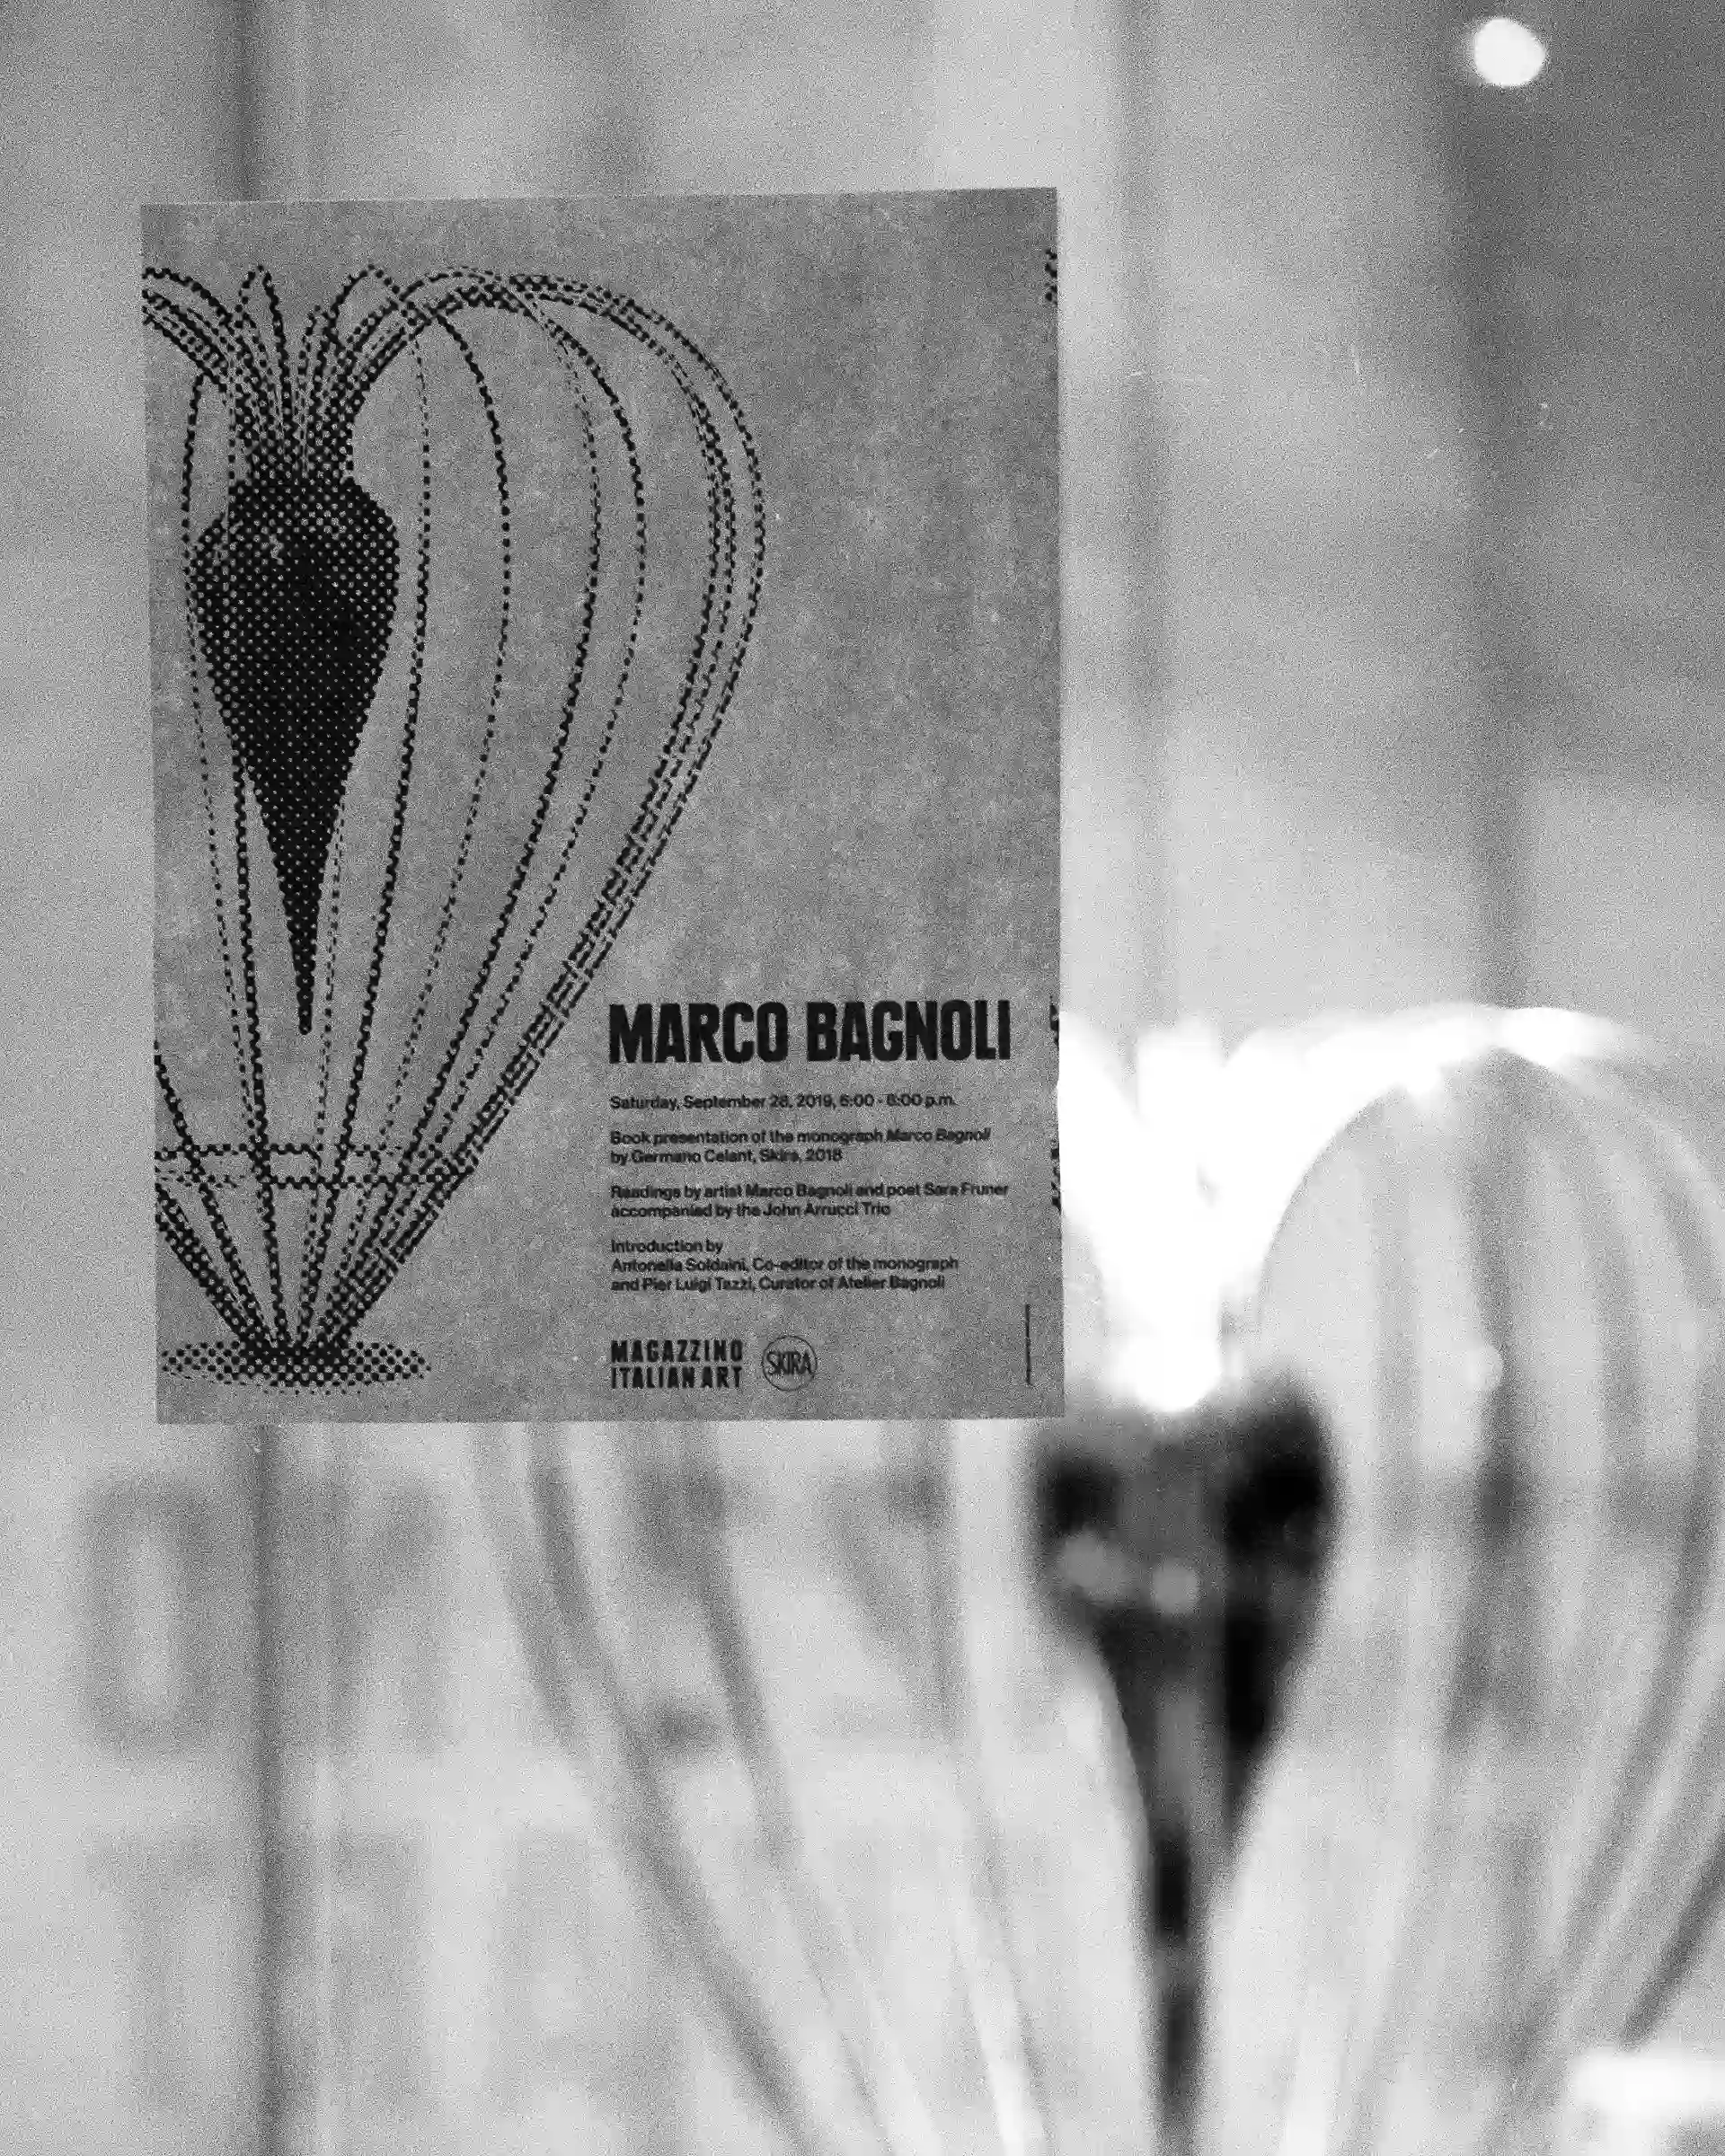 Poster of "Marco Bagnoli" book presentation event at Magazzino Italian Art Foundation on September 28, 2019